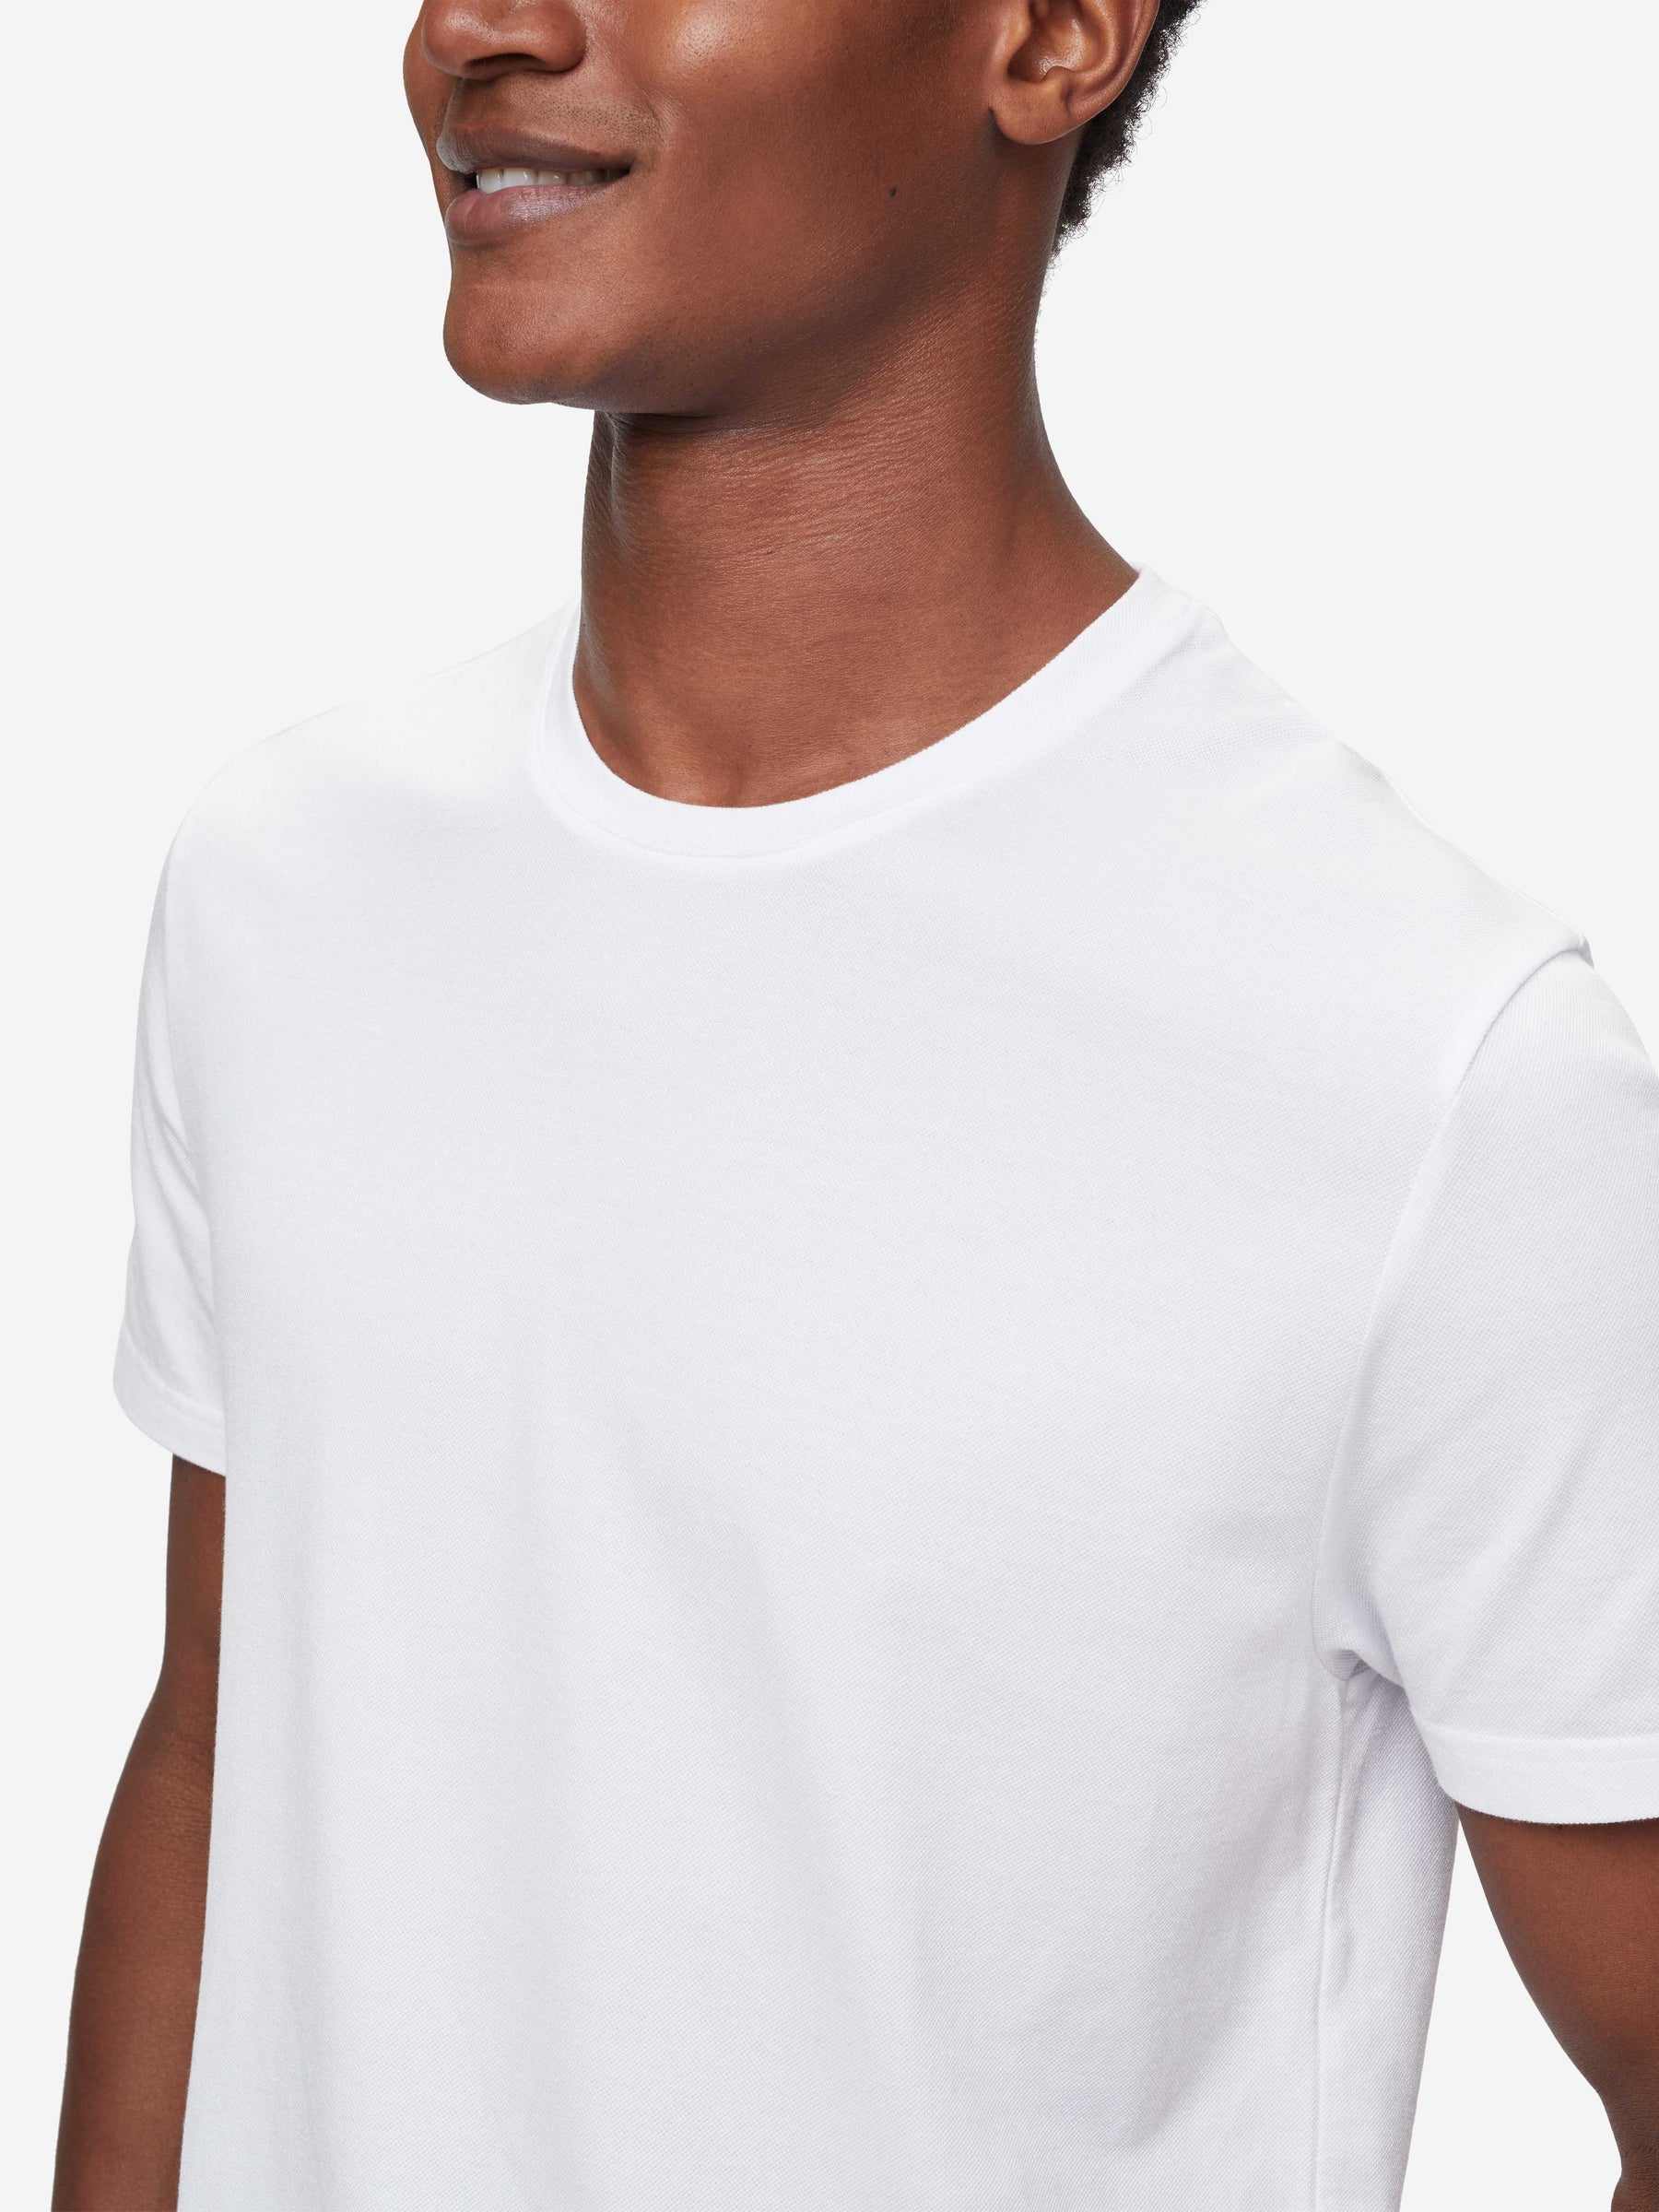 Men's T-Shirt Ramsay Pique Cotton Tencel White